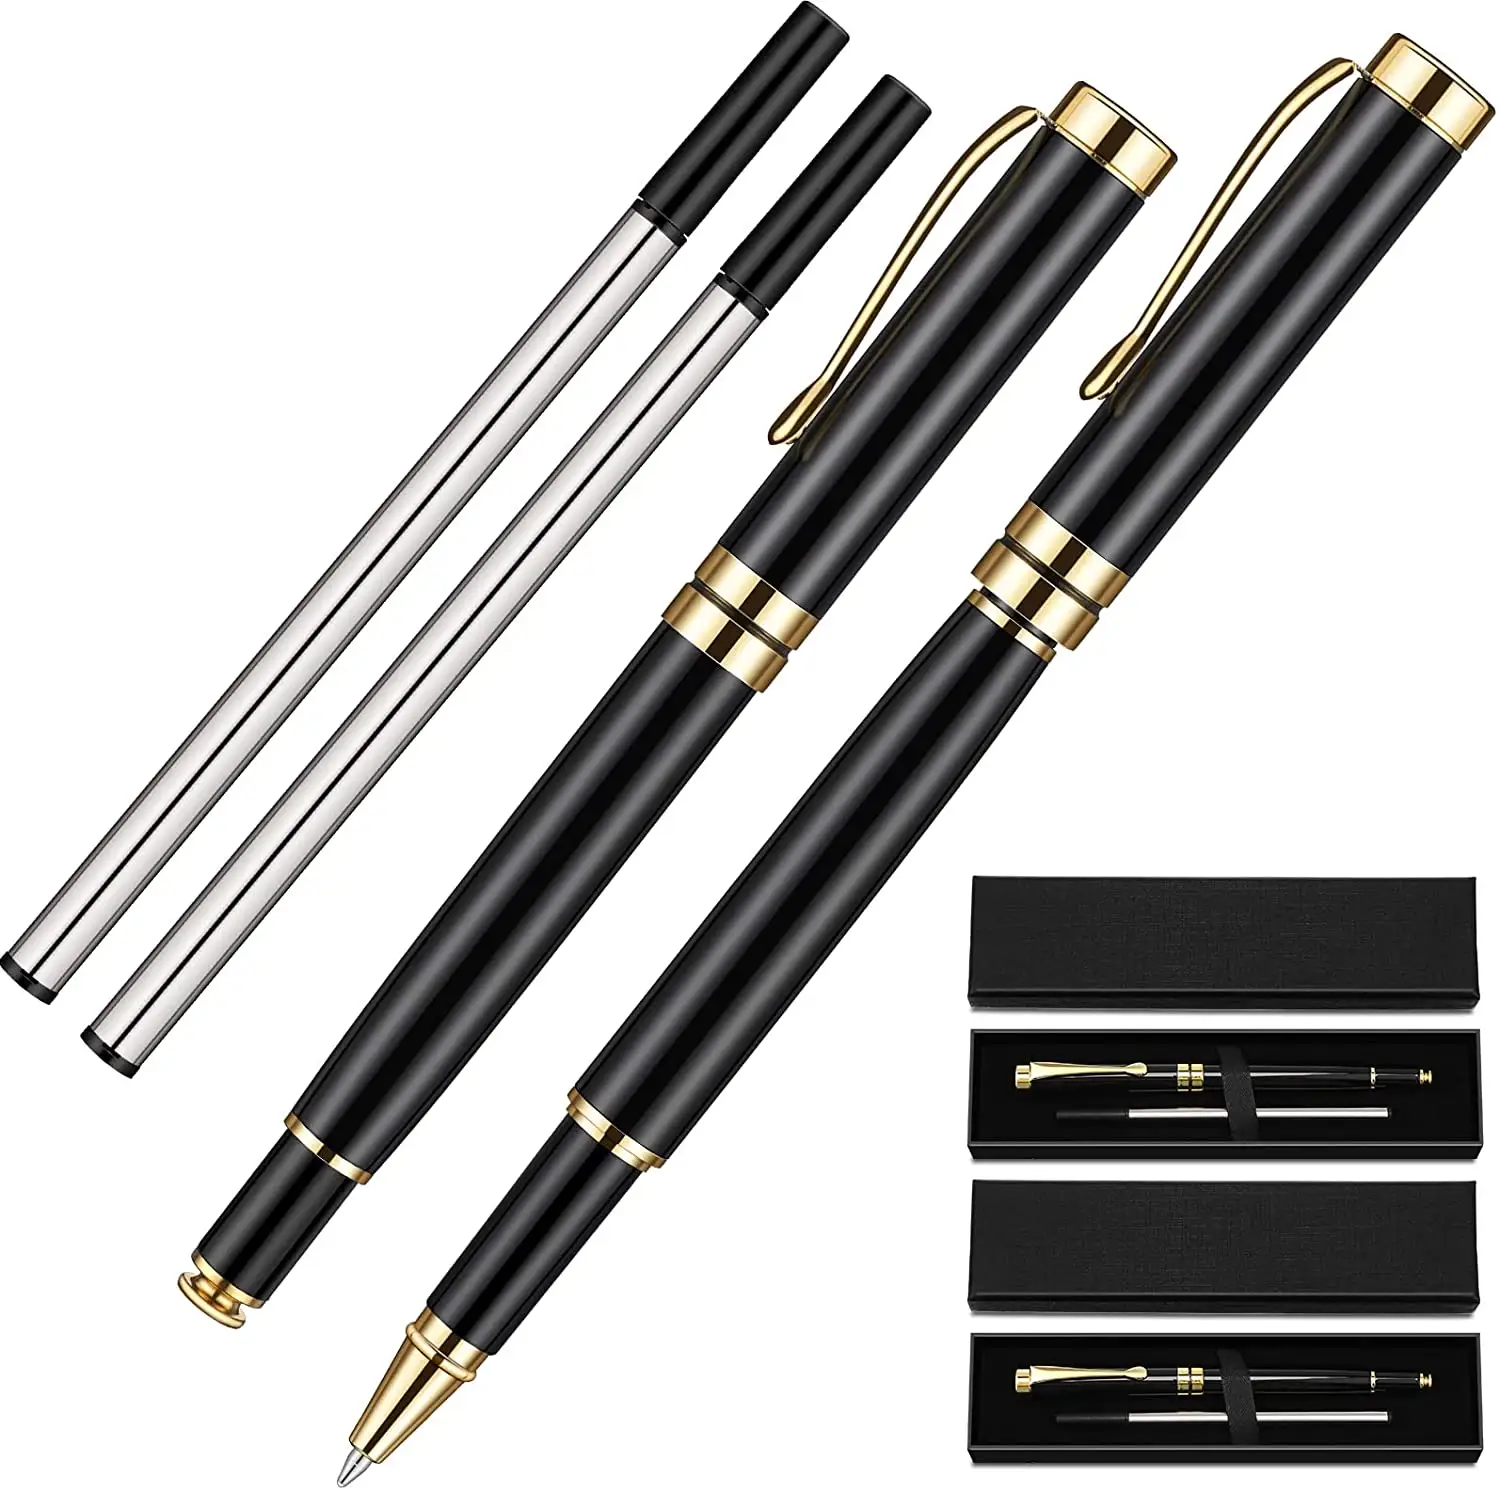 High quality black and gold metal roller pen set gift business adult metal pen in black box packaging black ink 0.5mm